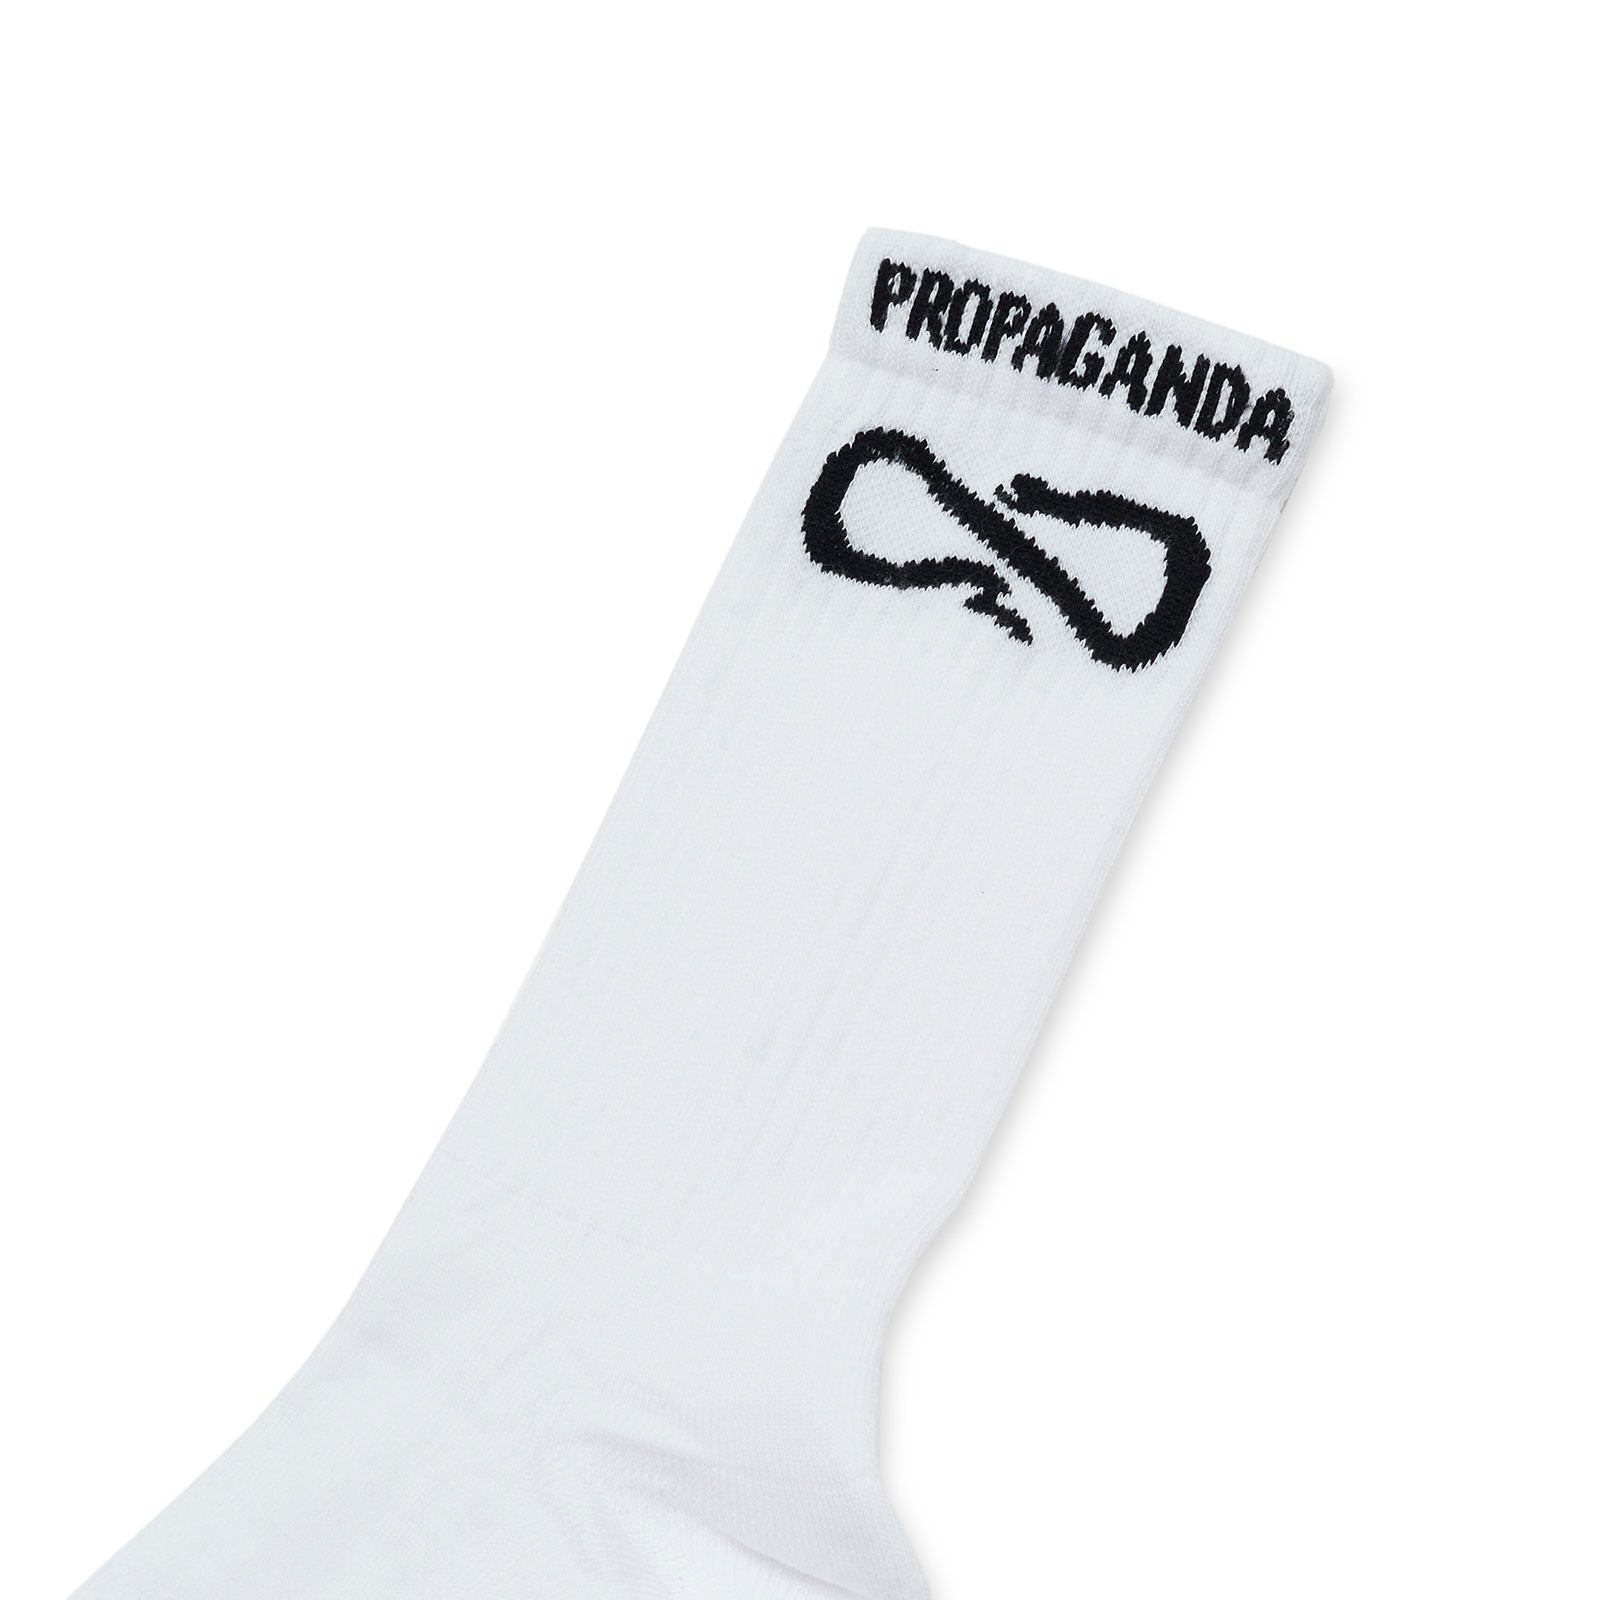 Propaganda calzini Logo Socks One Size 23SSPRAC238 white